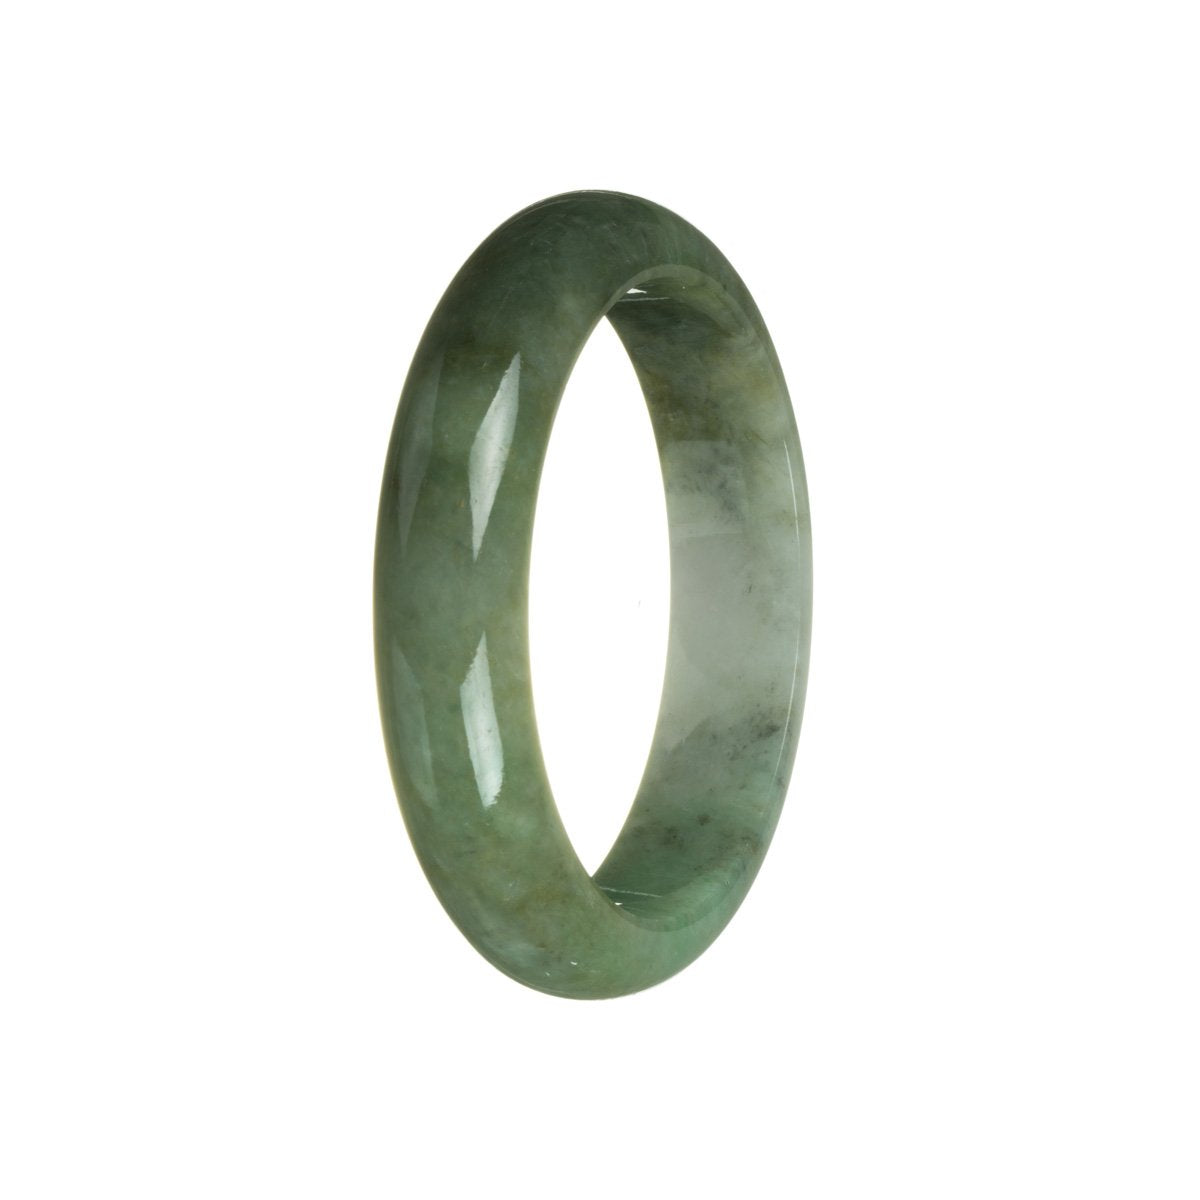 A beautiful half moon-shaped bracelet made of high-quality green and white Burmese jade.